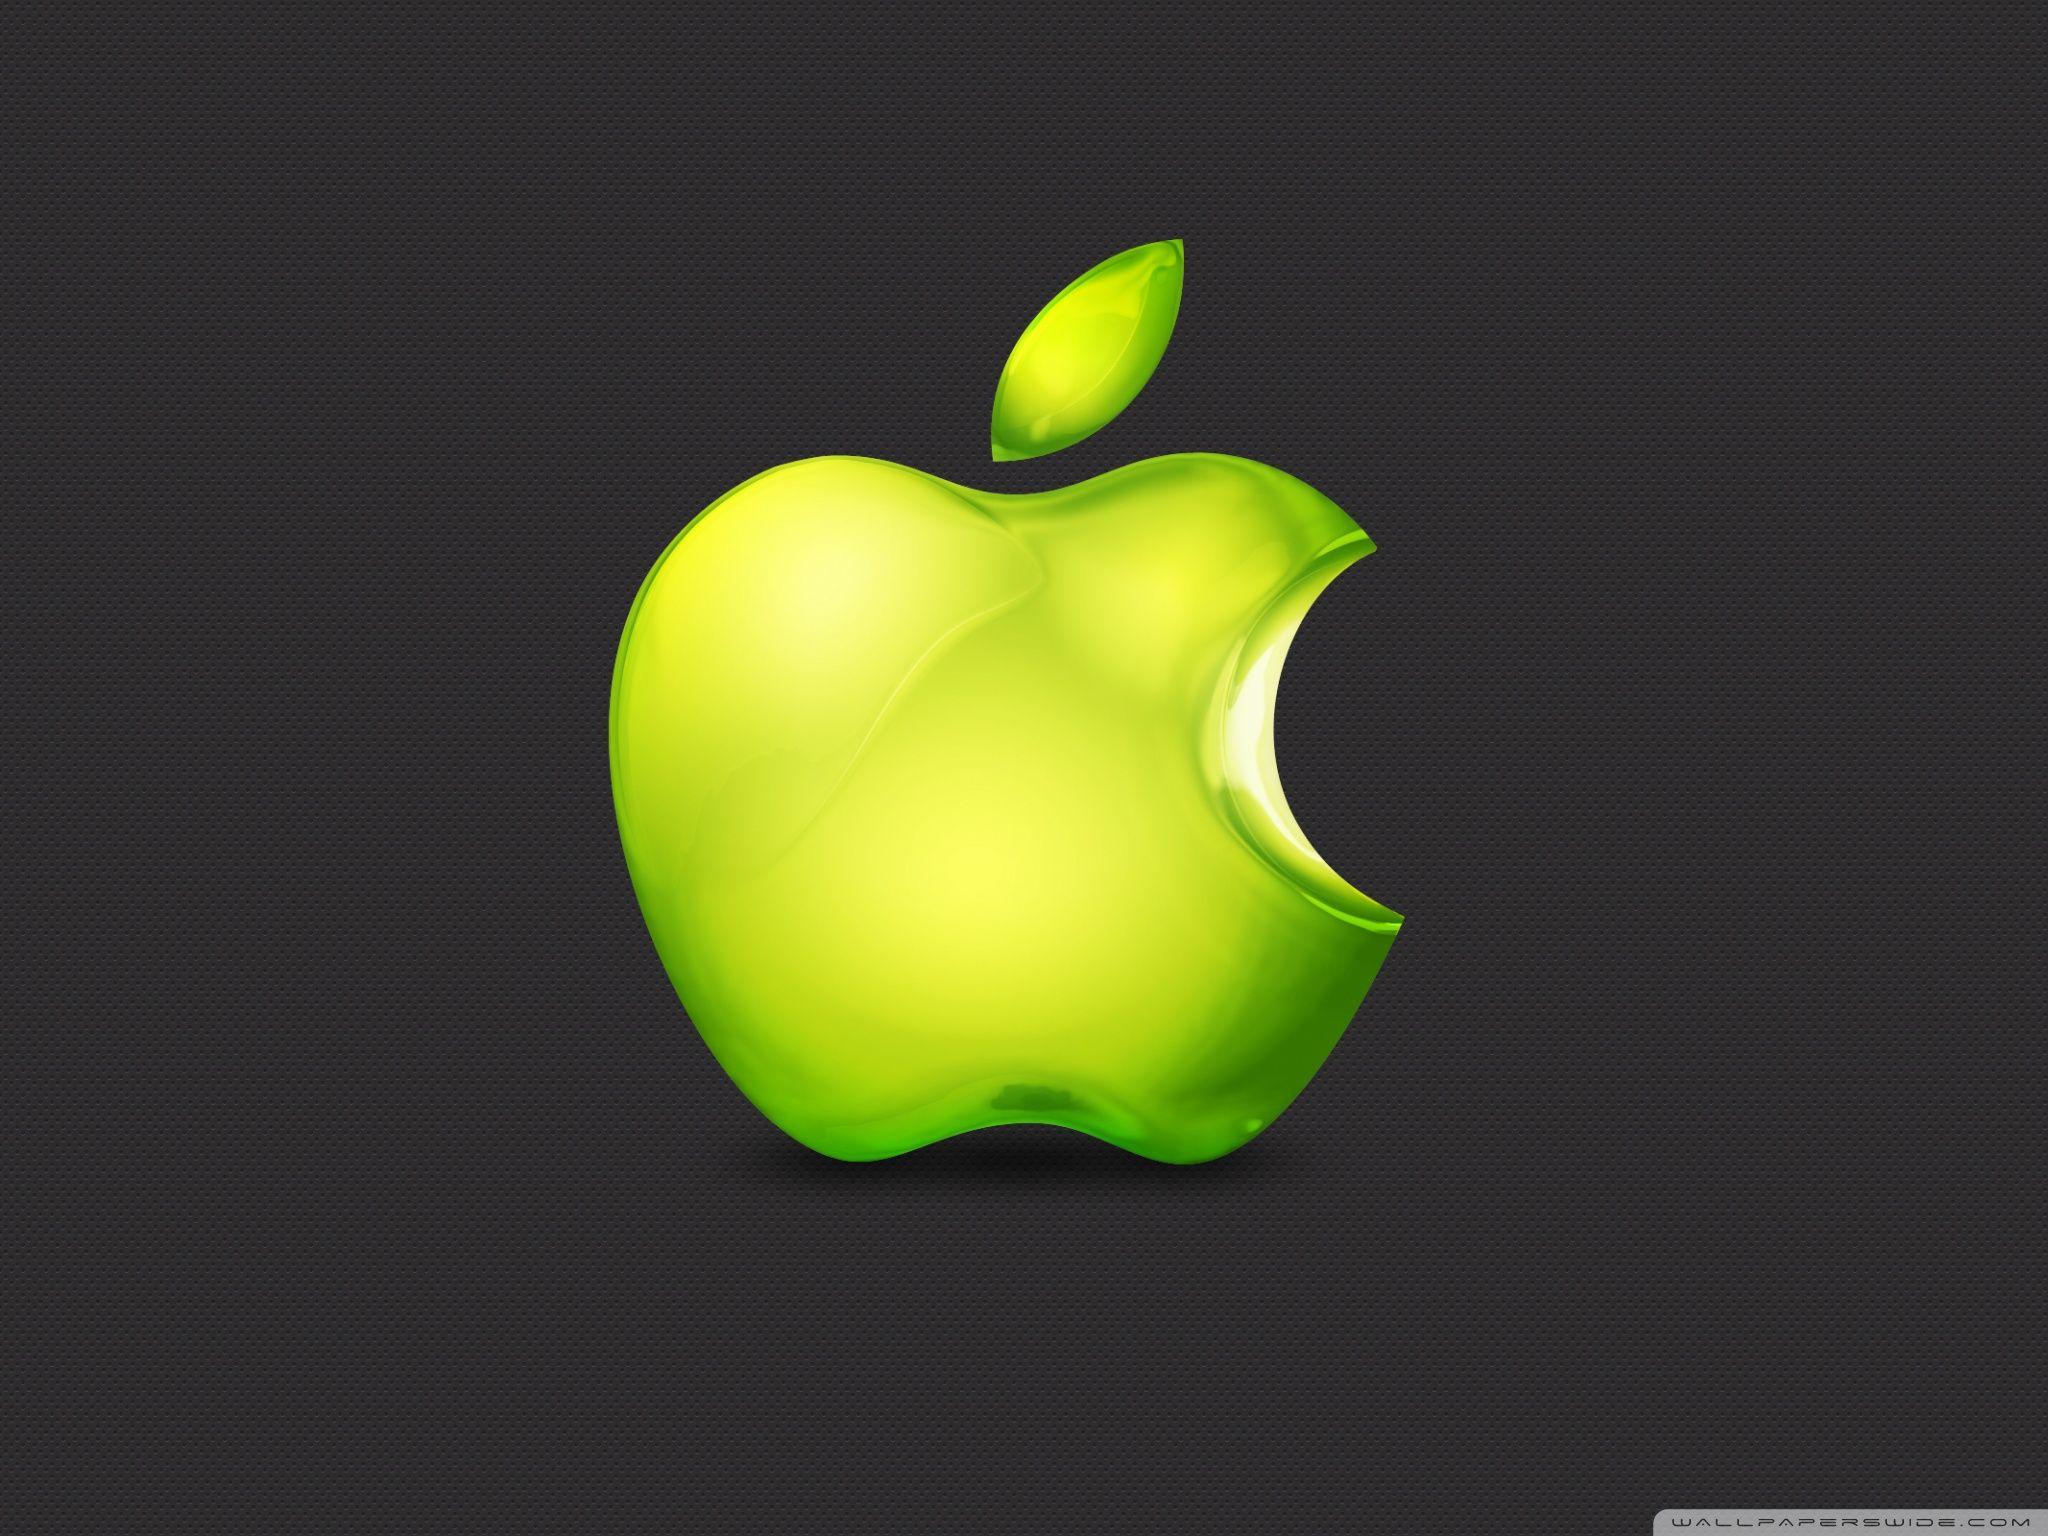 Diamond Apple Logo - Green Apple Logo ❤ 4K HD Desktop Wallpaper for 4K Ultra HD TV ...